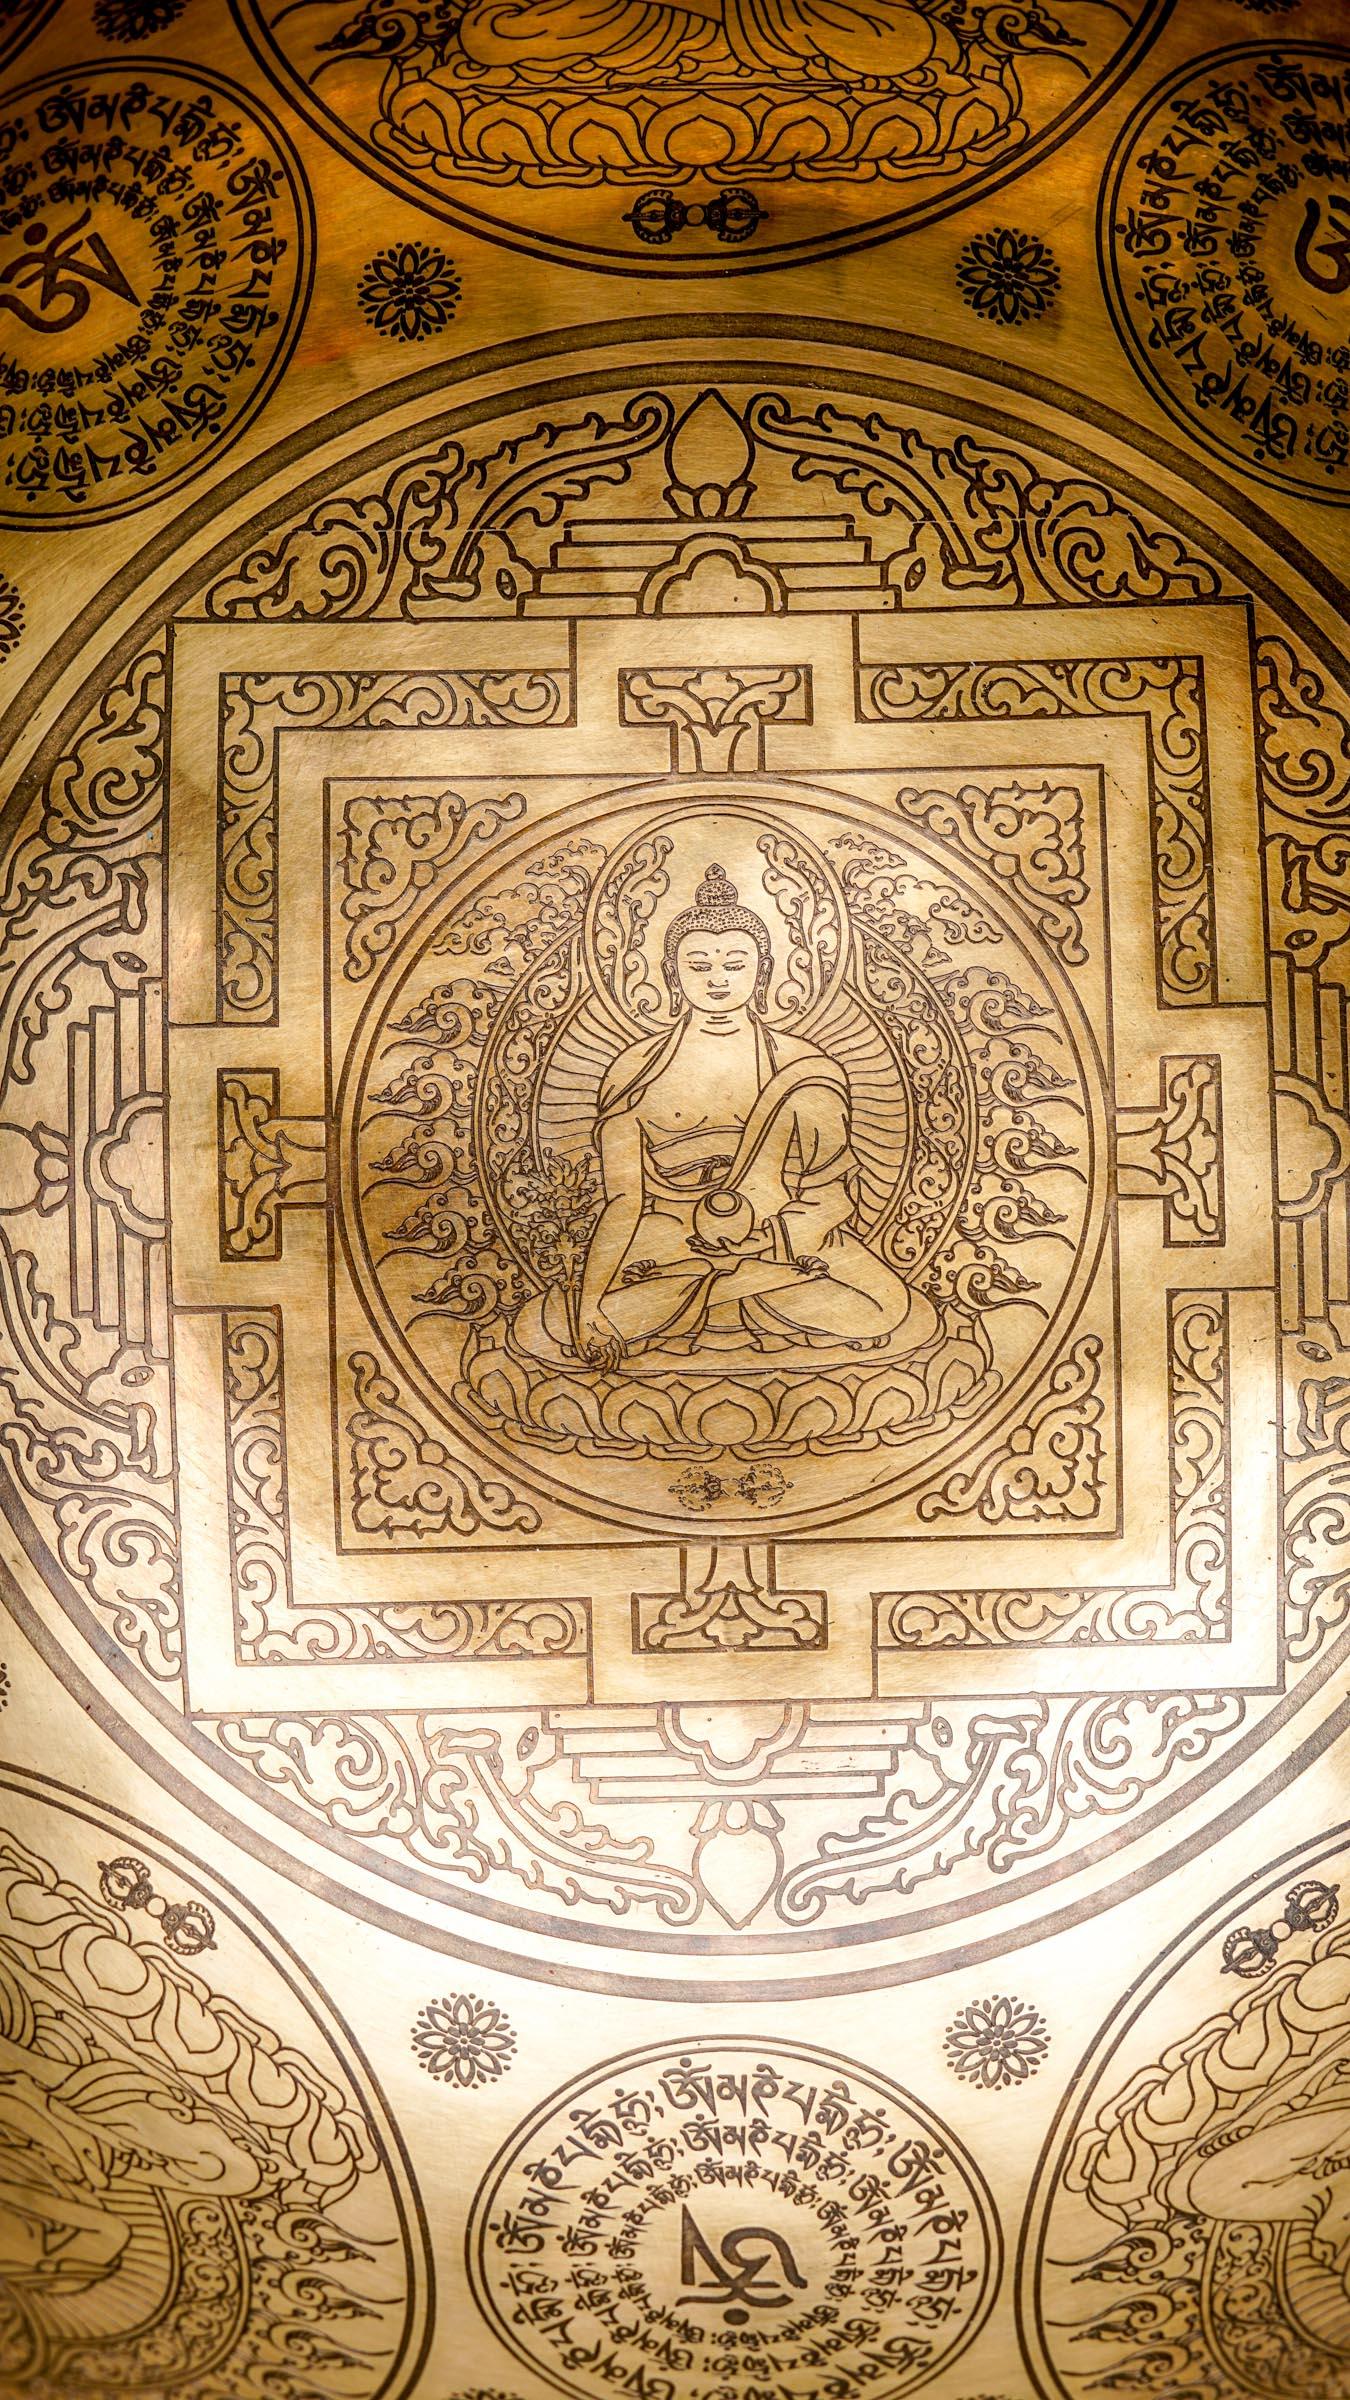 Singing bowl Buddha Mandala Art special for exclusive sound healing